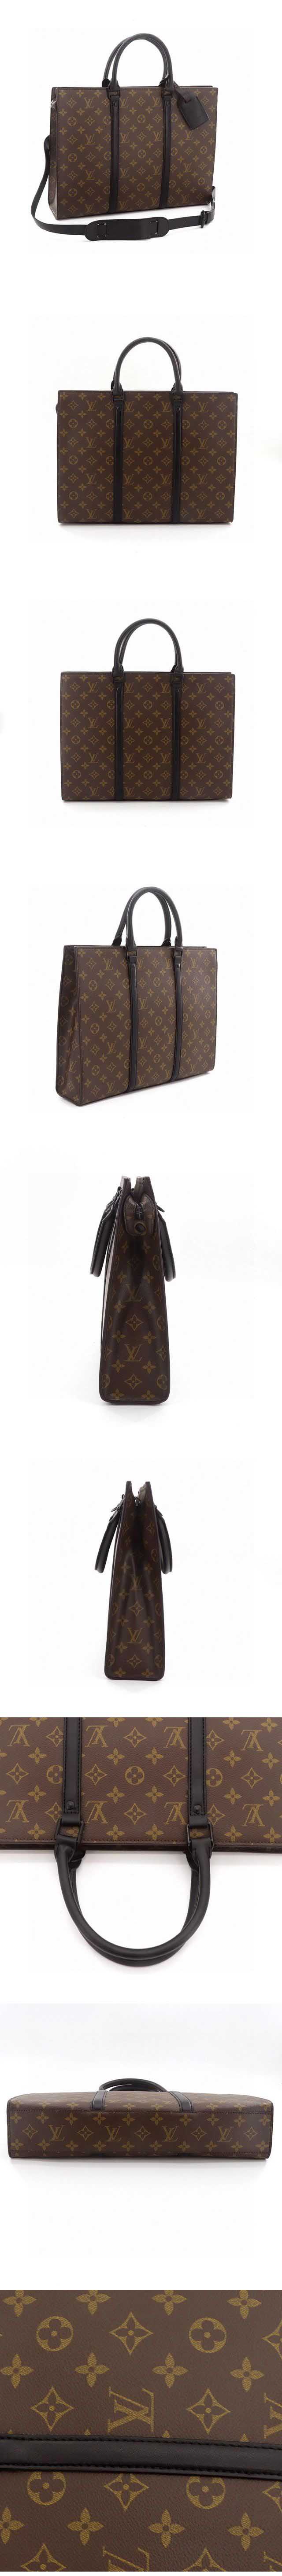 Louis Vuitton Monogram Eclipse Shoulder Bag ルイヴィトン モノグラム エクリプス ショルダーバッグ ブラウン